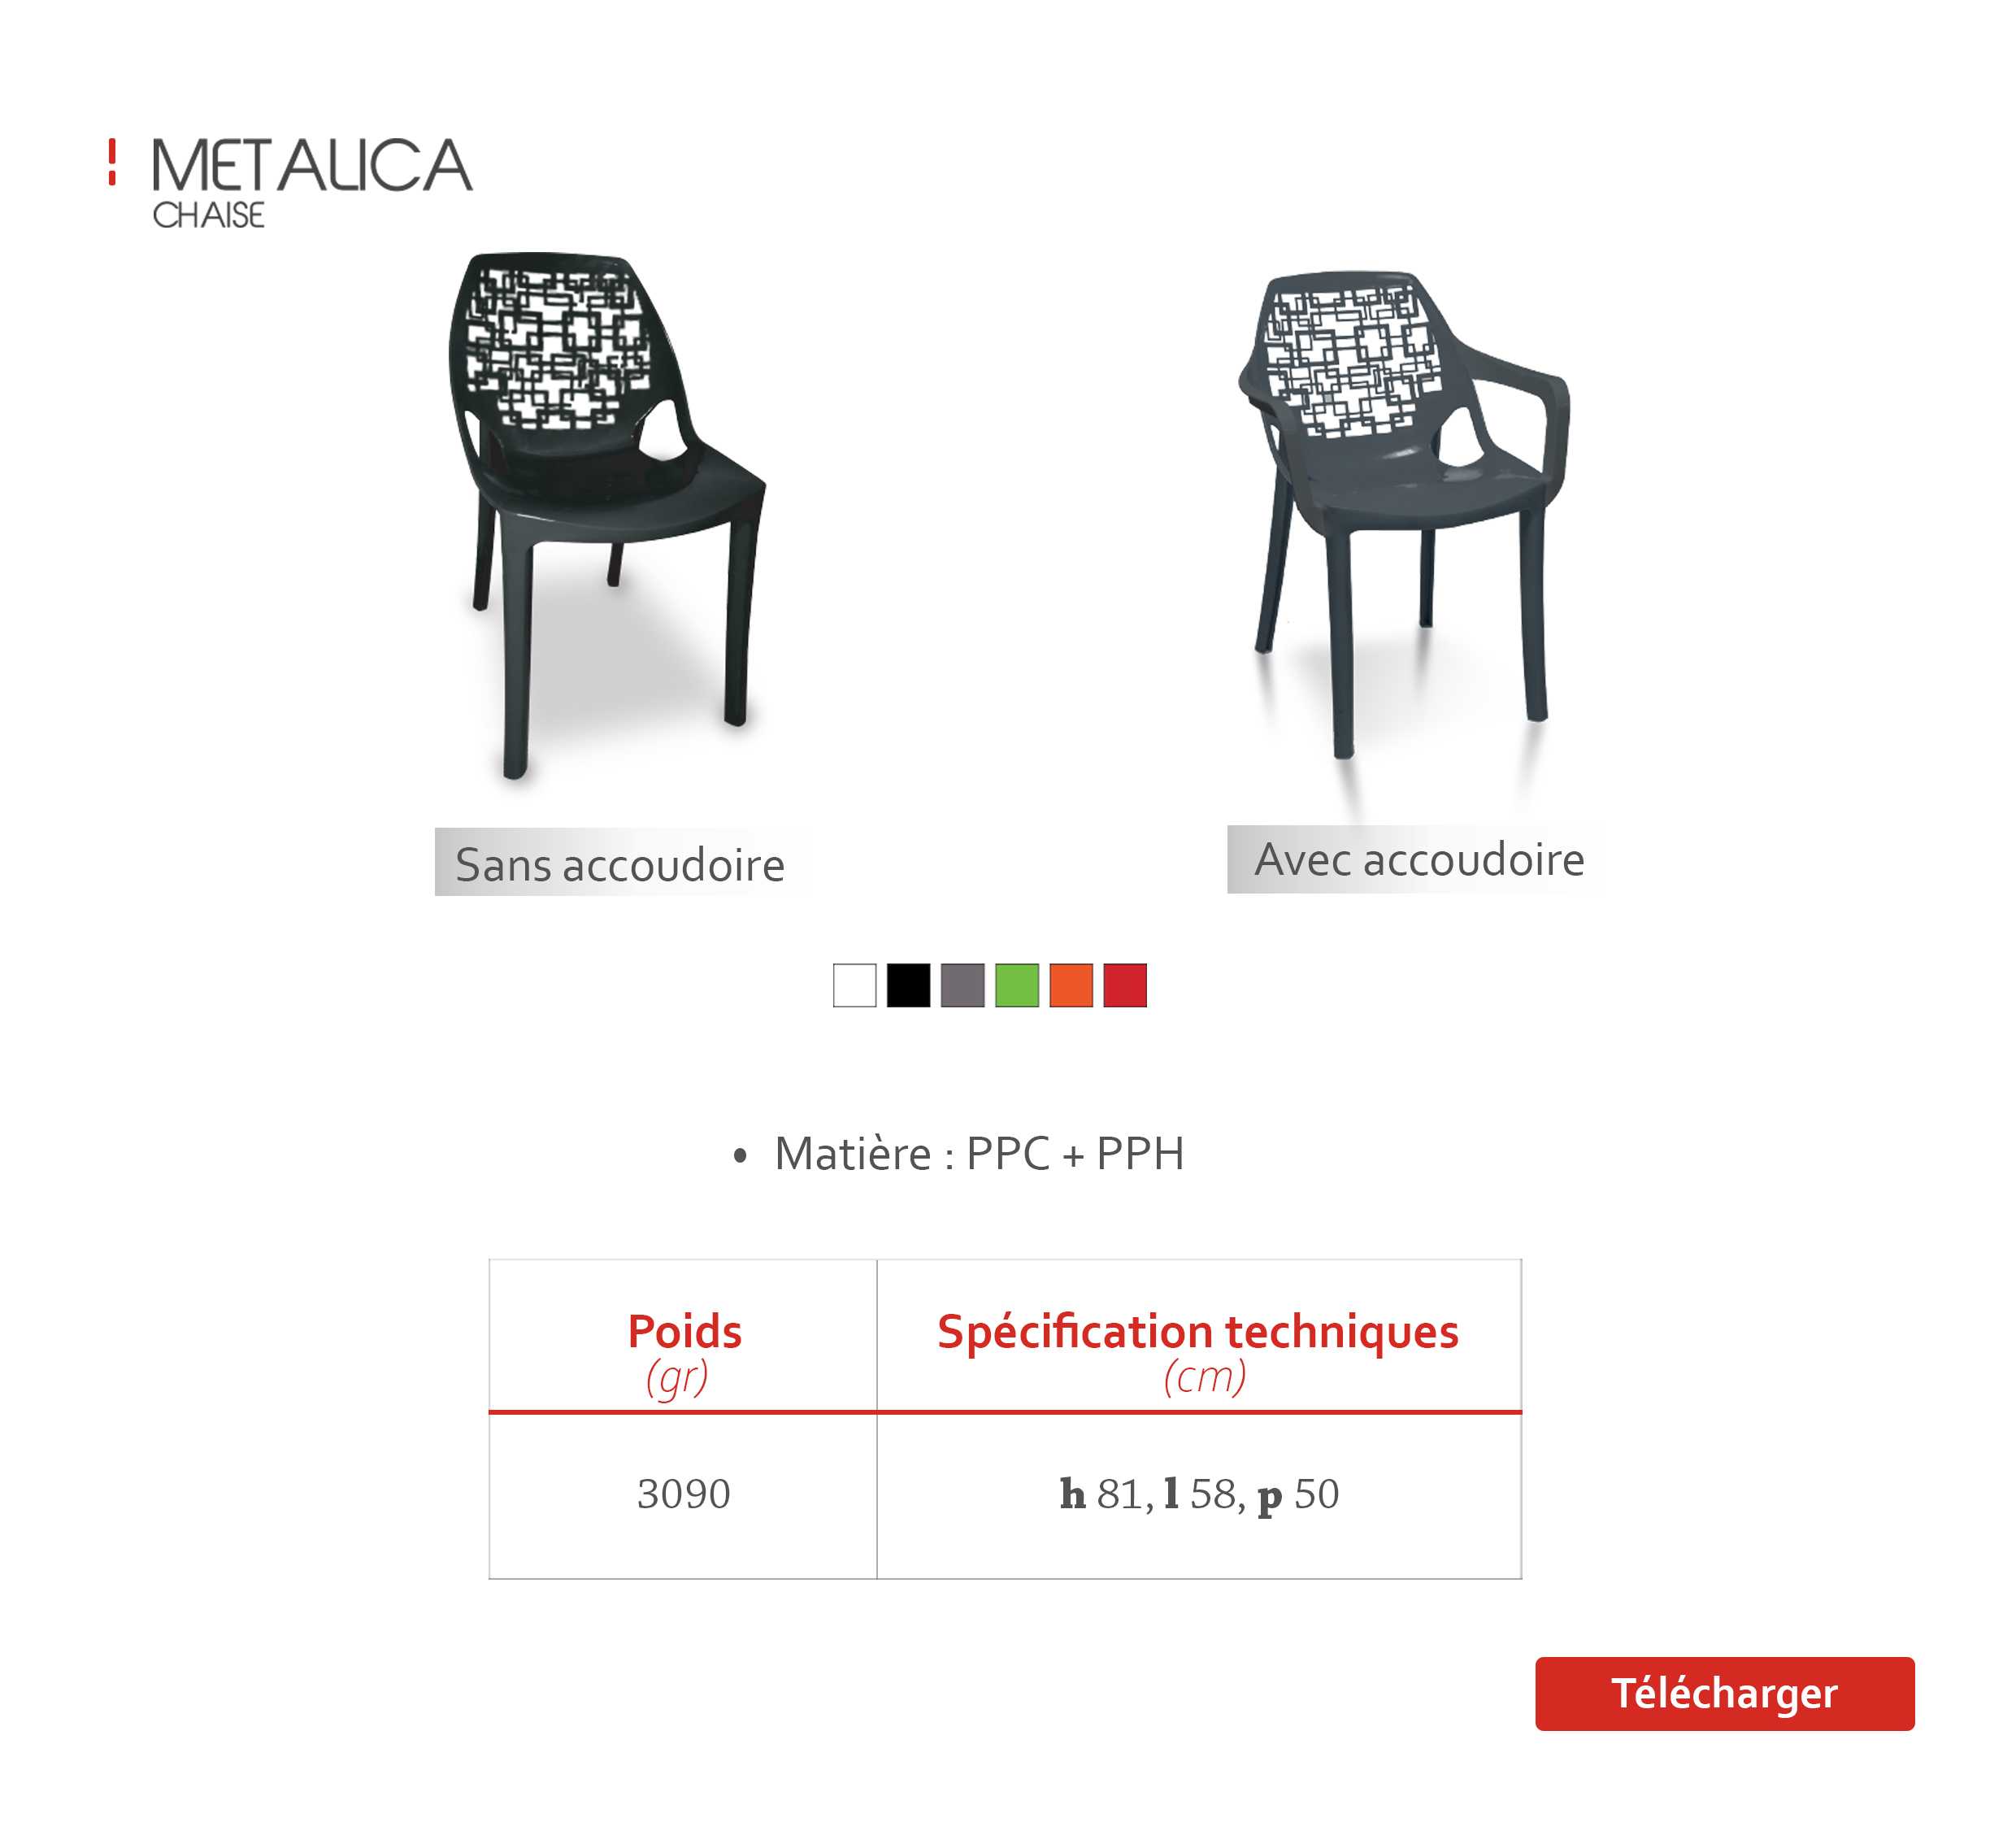 Metalica chaise